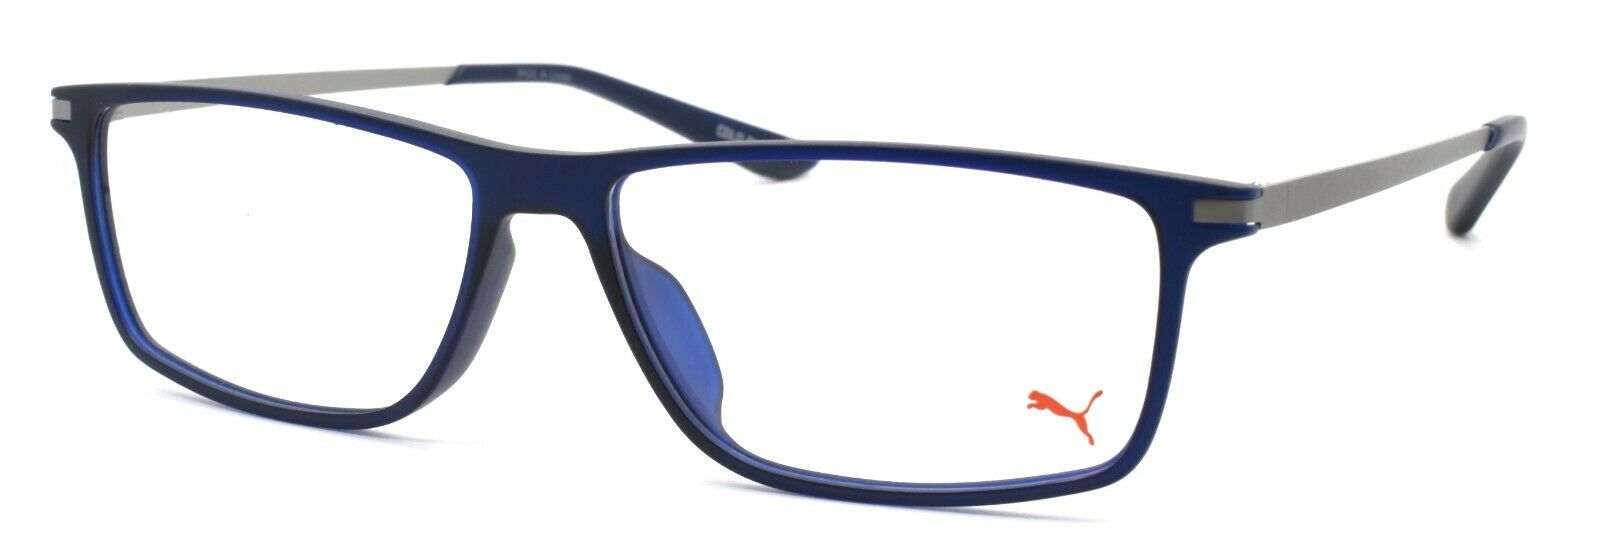 1-PUMA PU0115O 004 Men's Eyeglasses Frames 54-14-145 Matte Blue / Silver-889652063713-IKSpecs